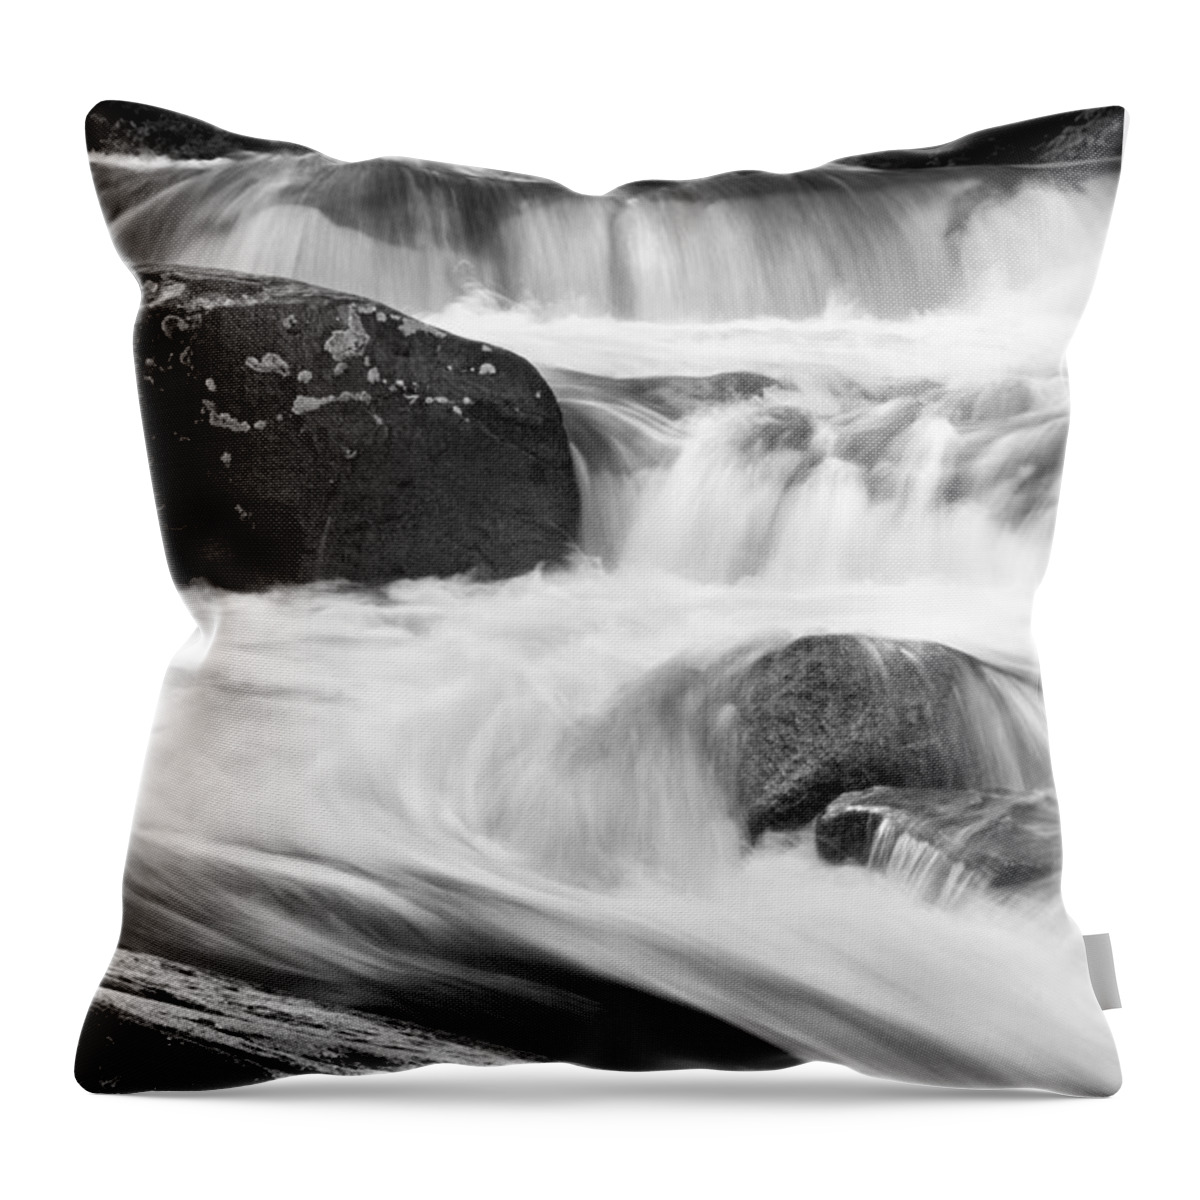 Waterfall Throw Pillow featuring the photograph Waterfall by David Lichtneker